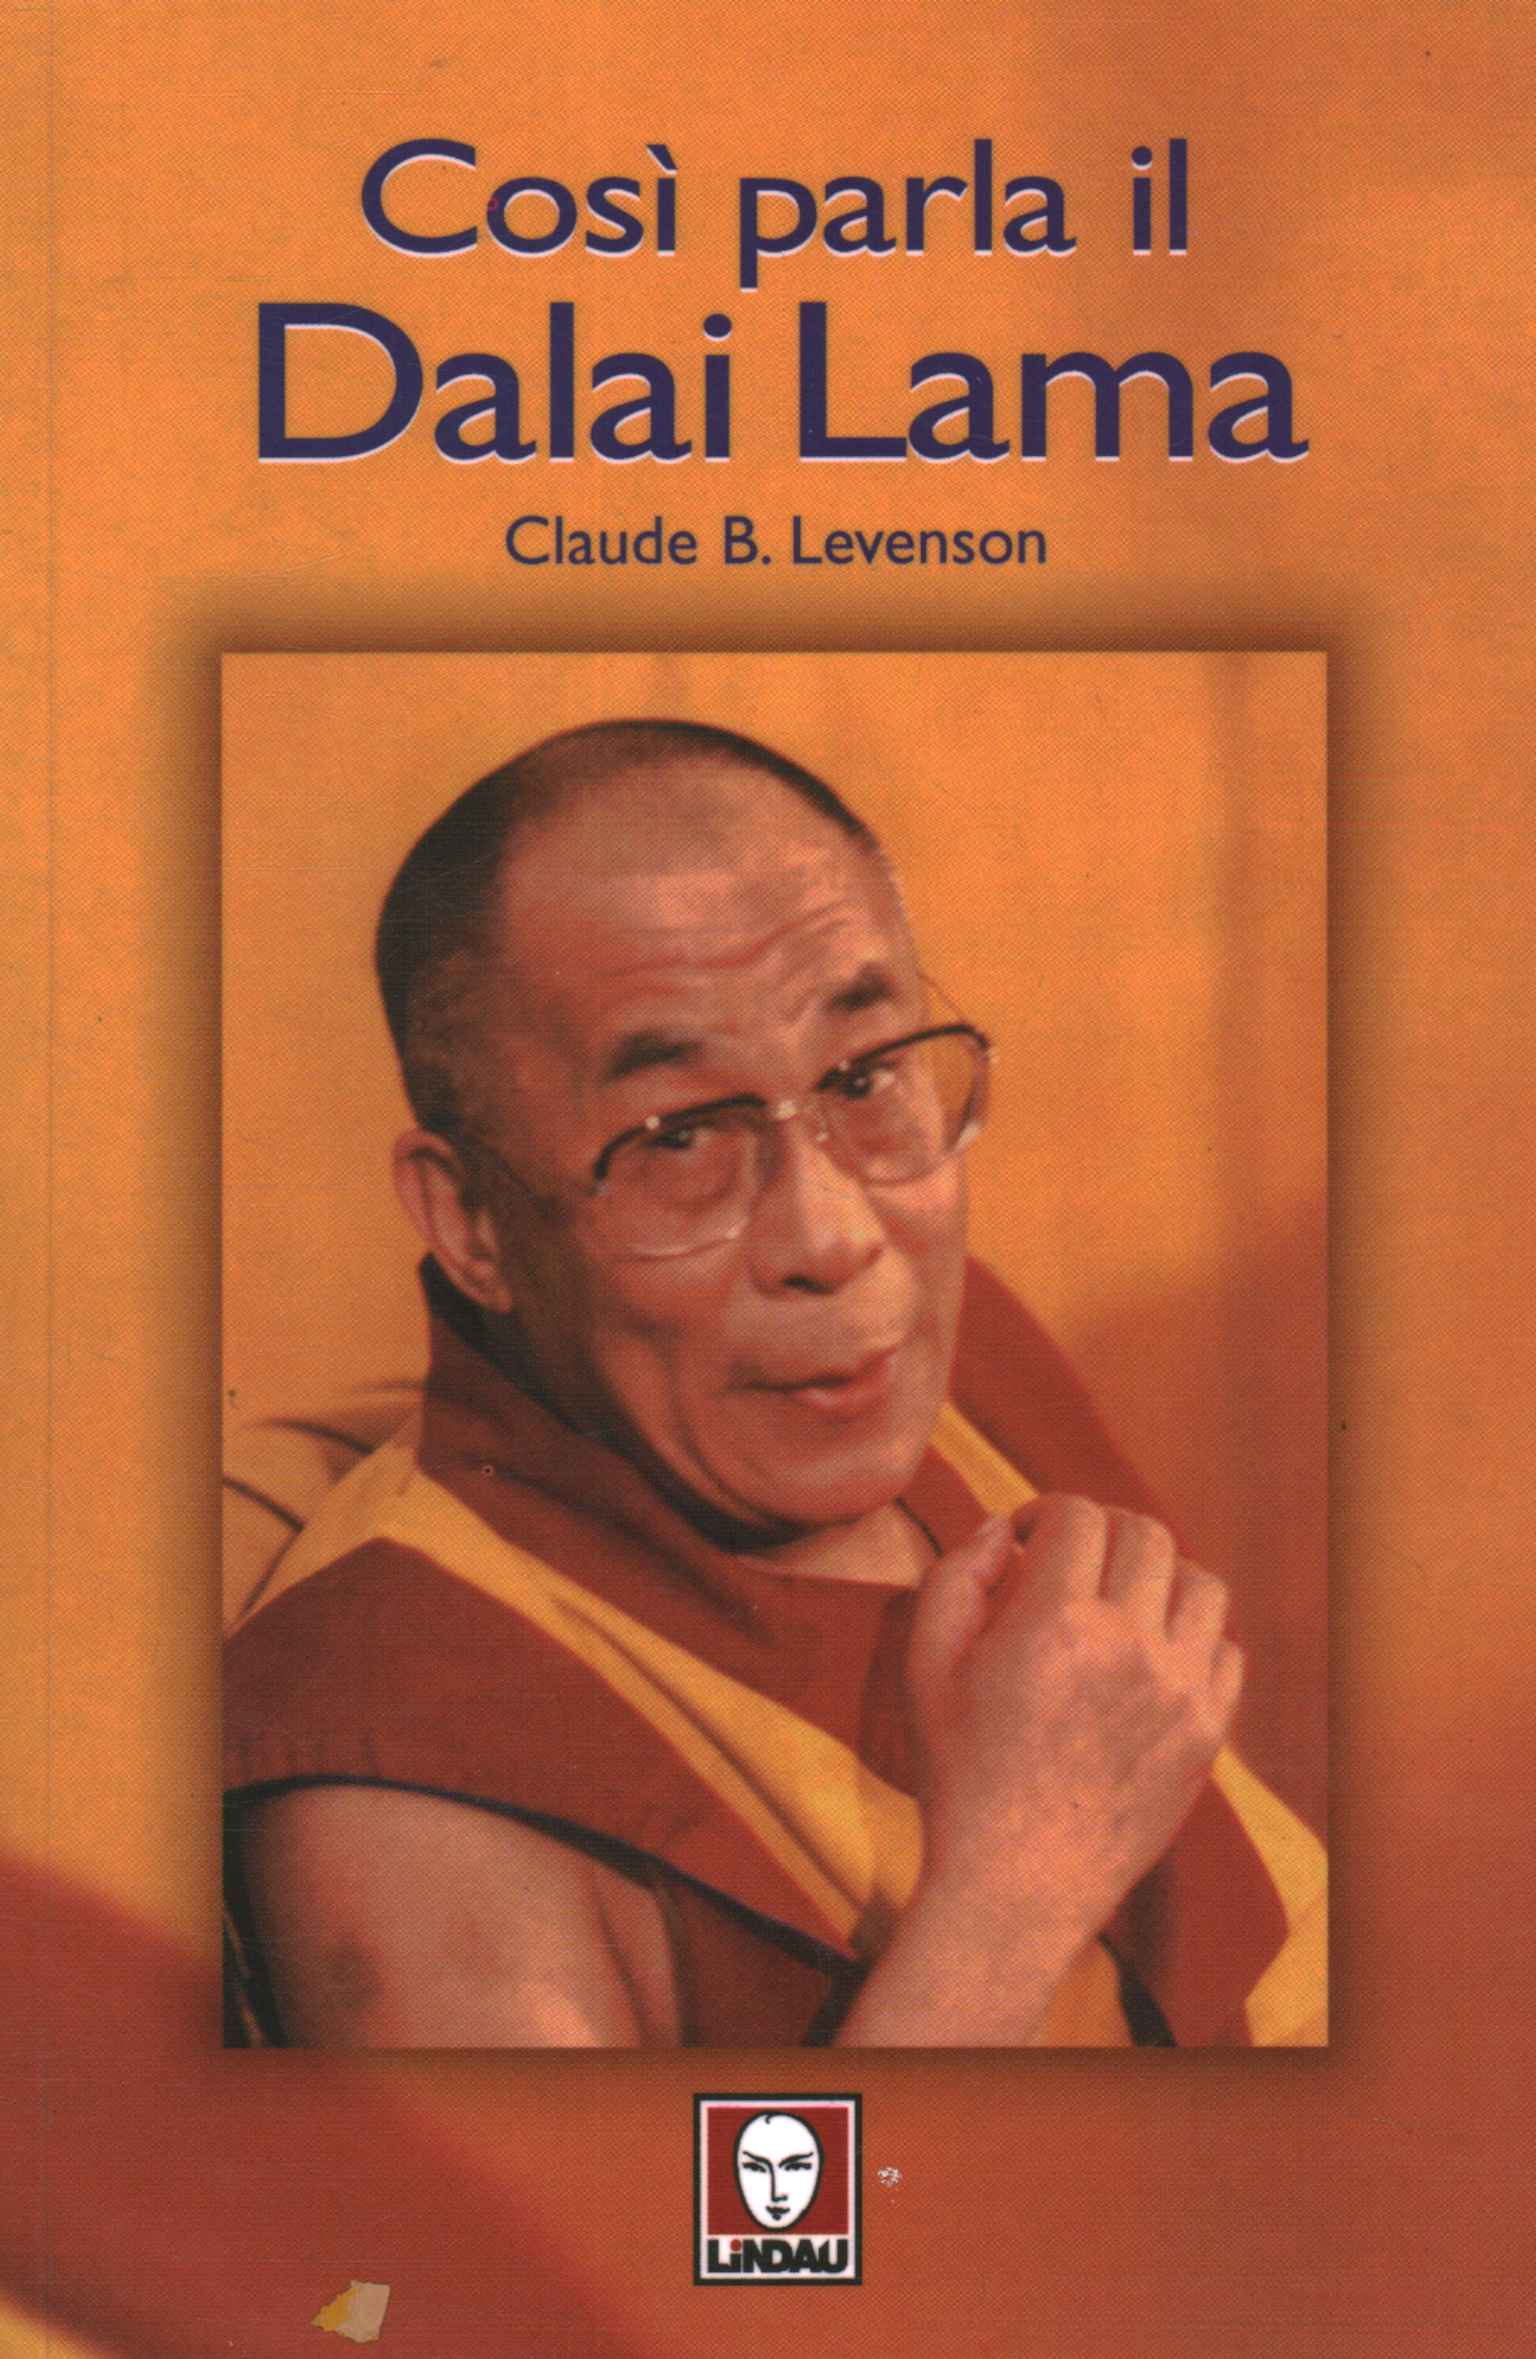 So spricht der Dalai Lama